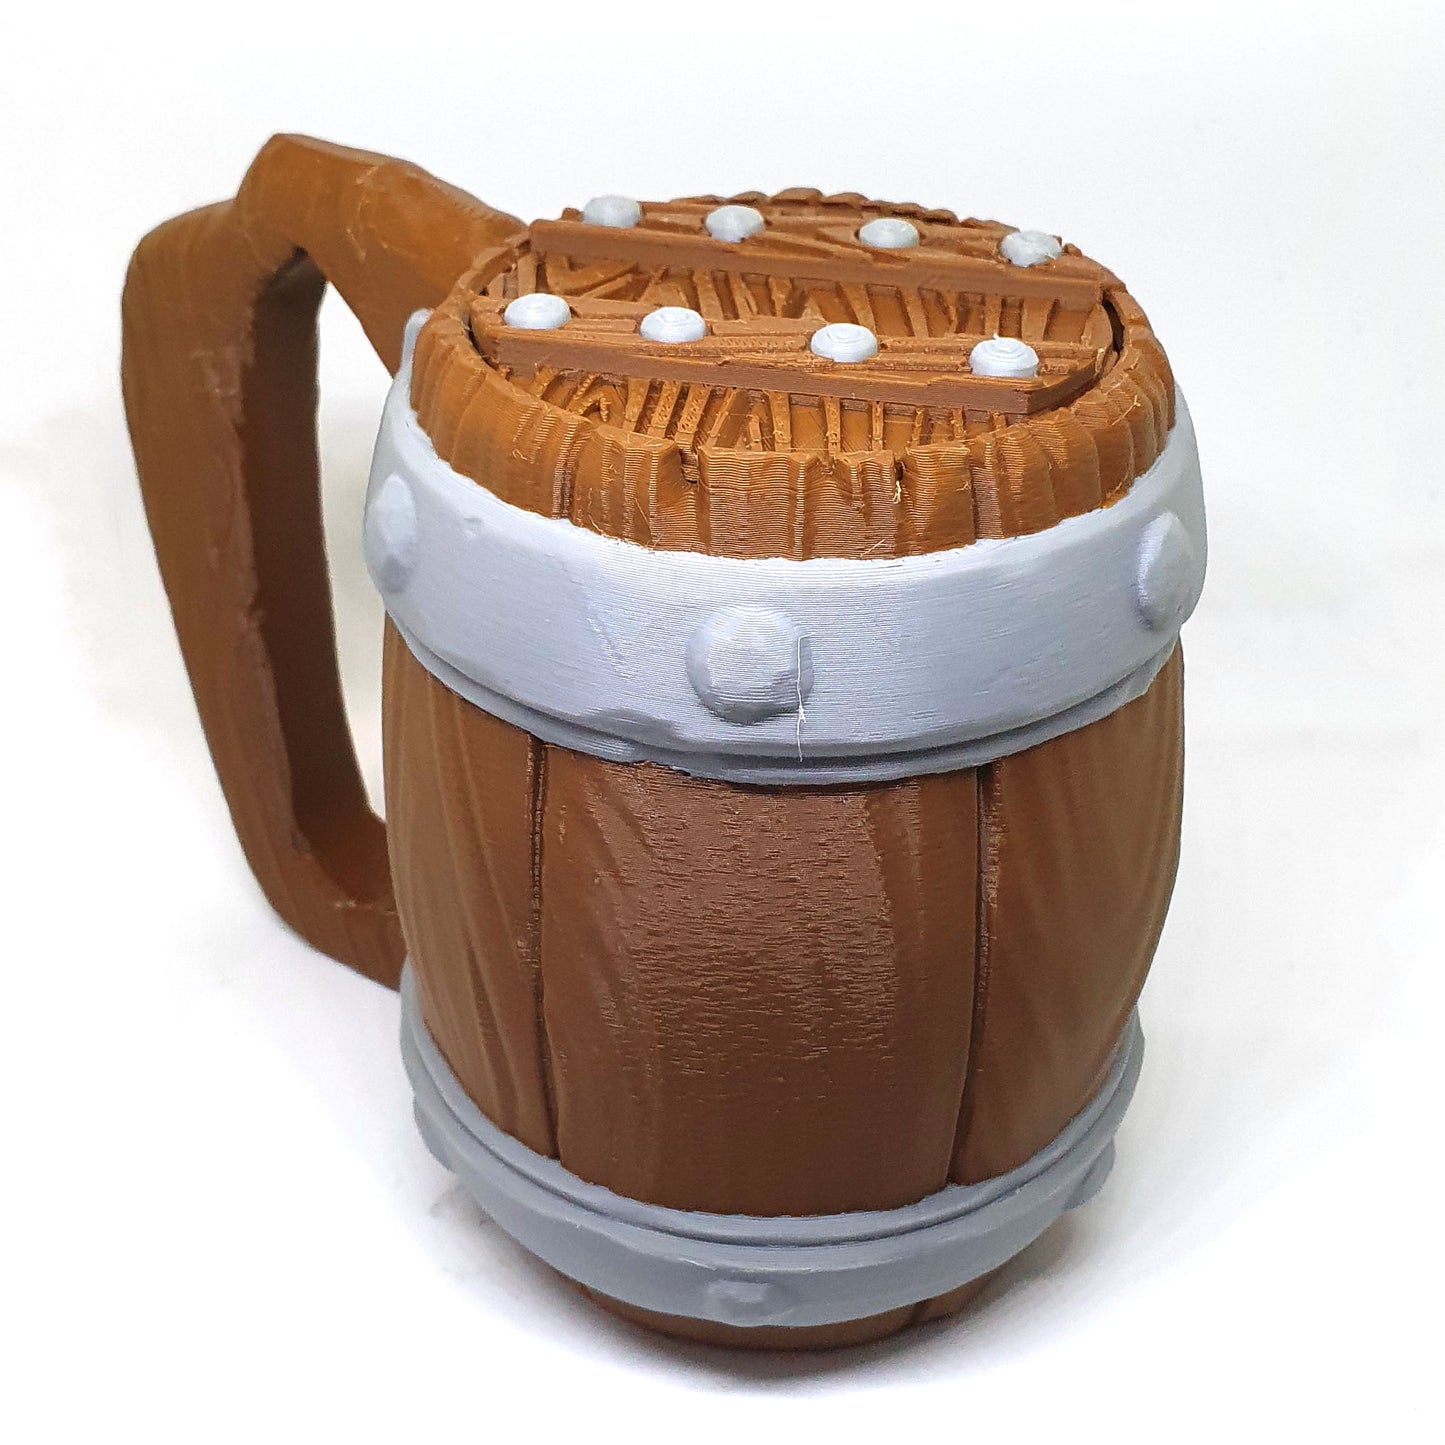 The Classic Tavern #2  330ml Mythic Mug / Can Holder / Storage Box